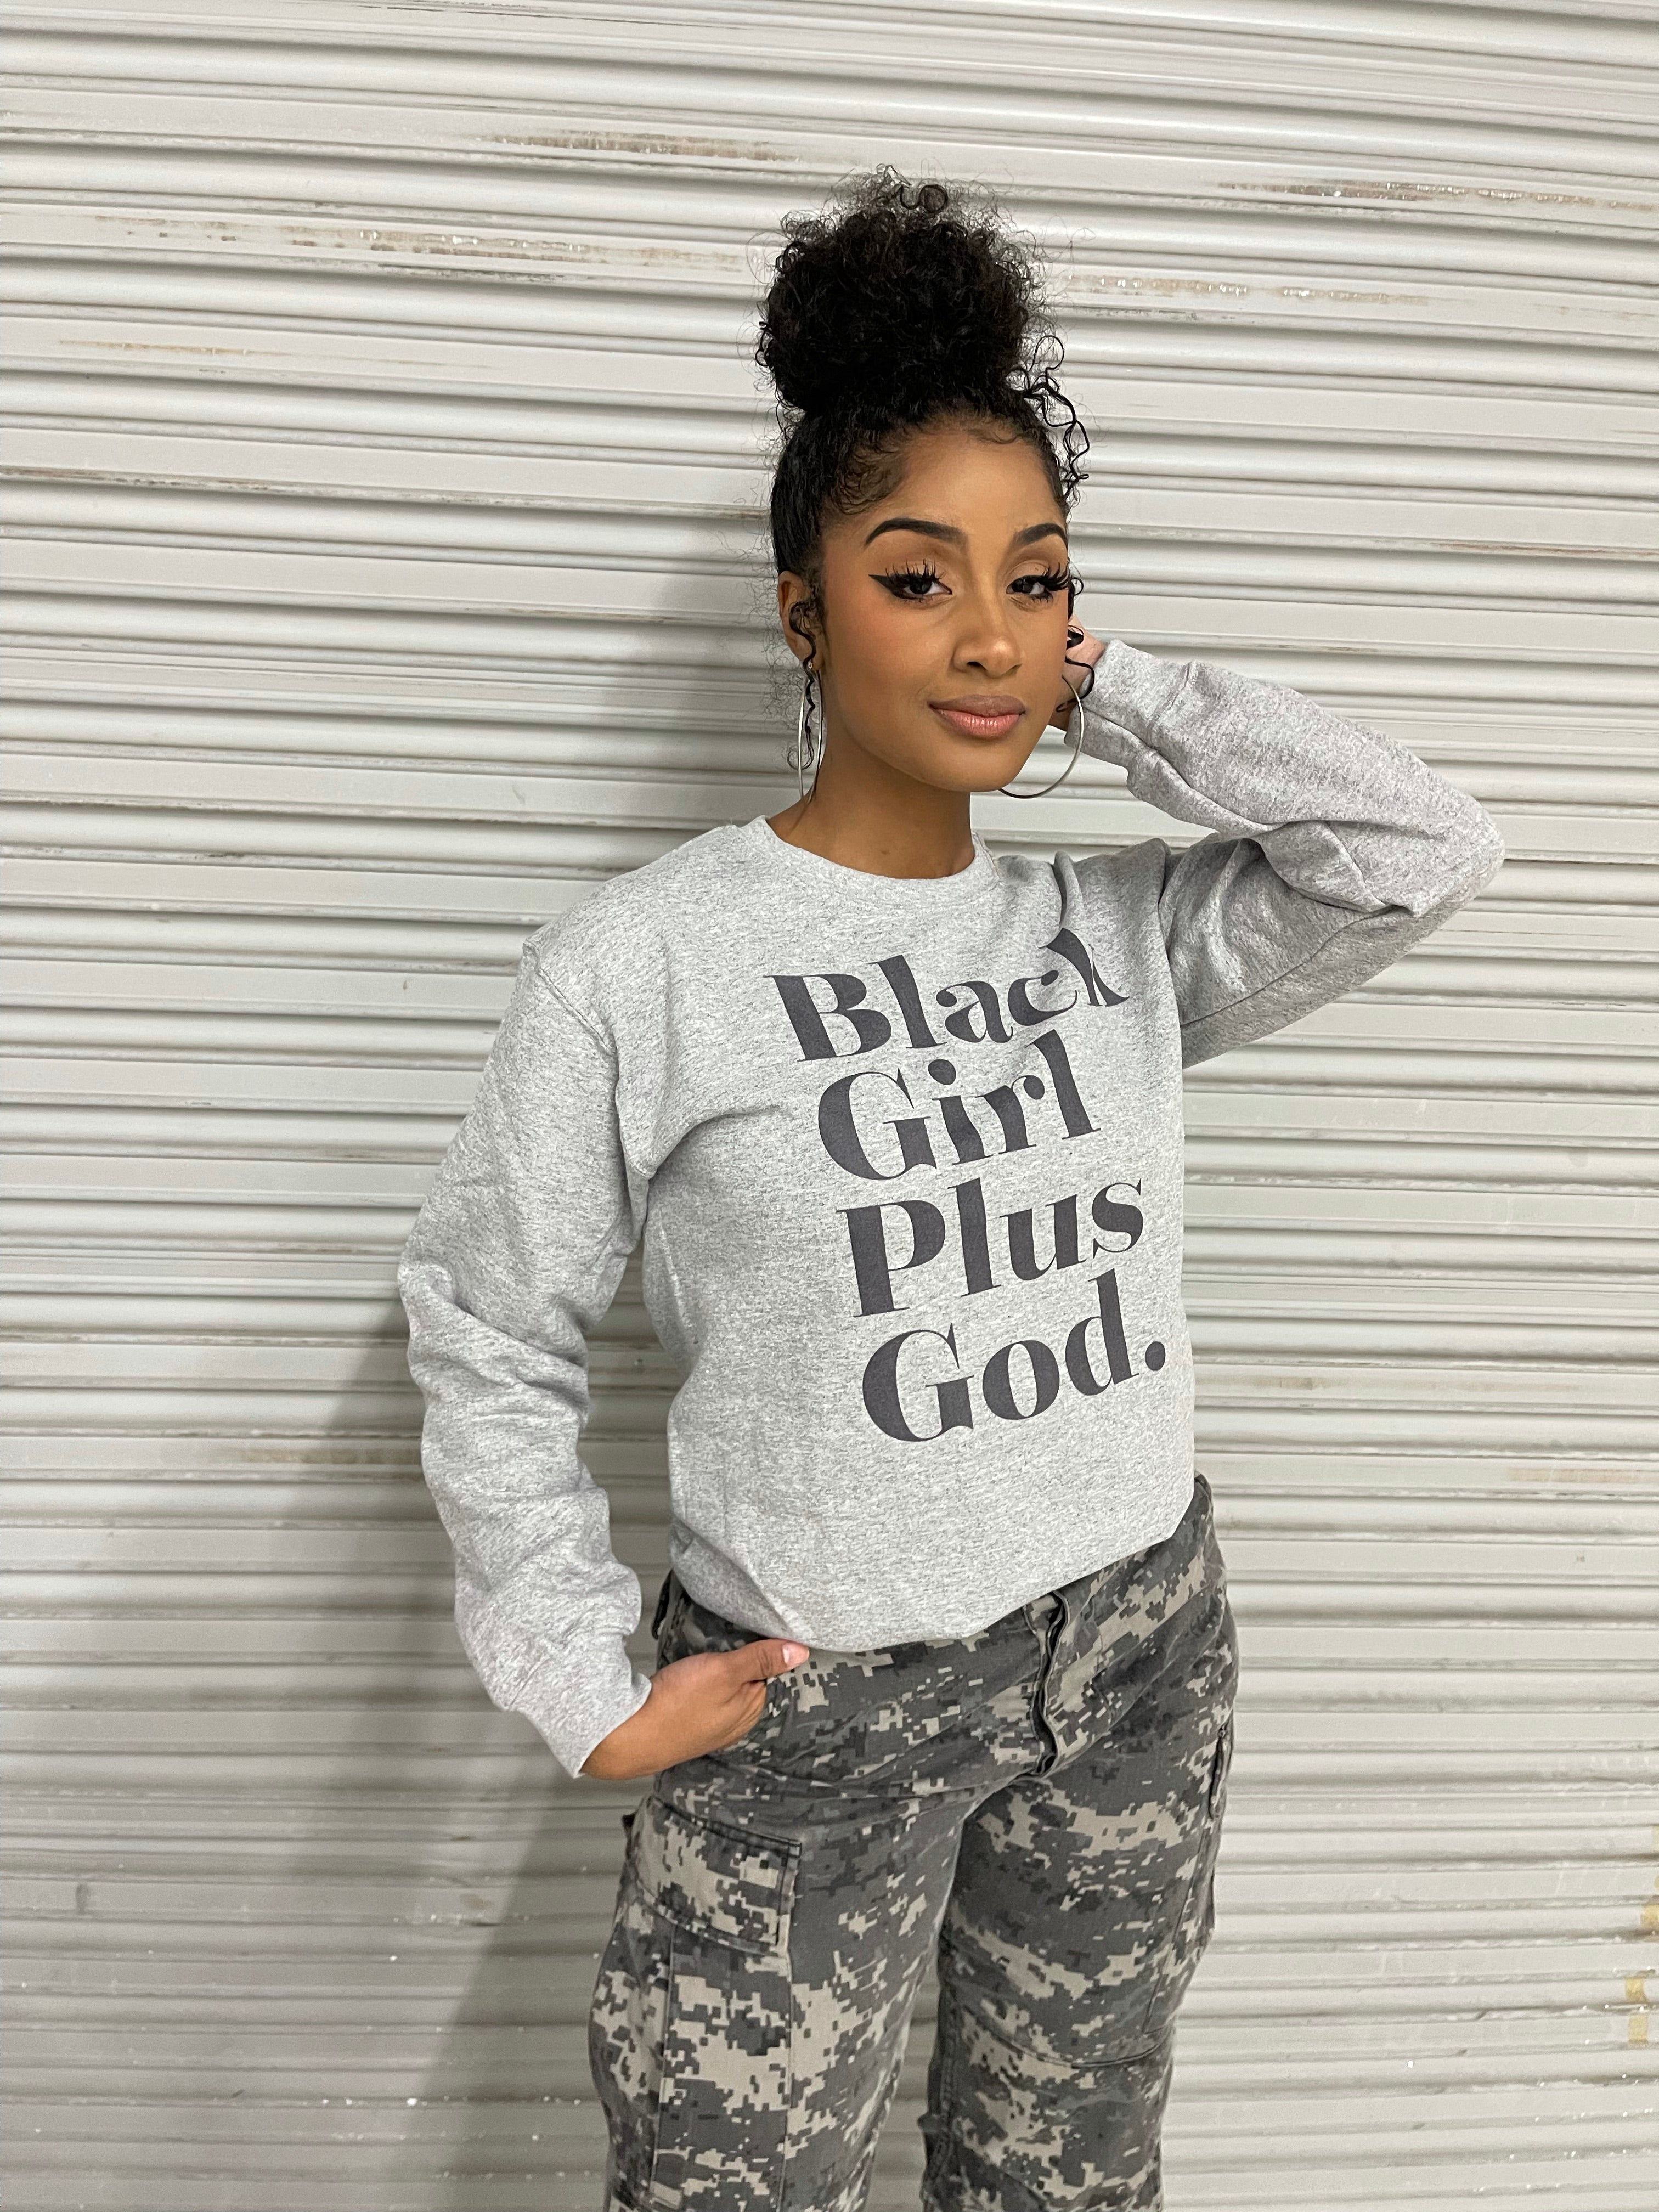 Black Girl Plus God Special Edition Sweatshirt - Historical